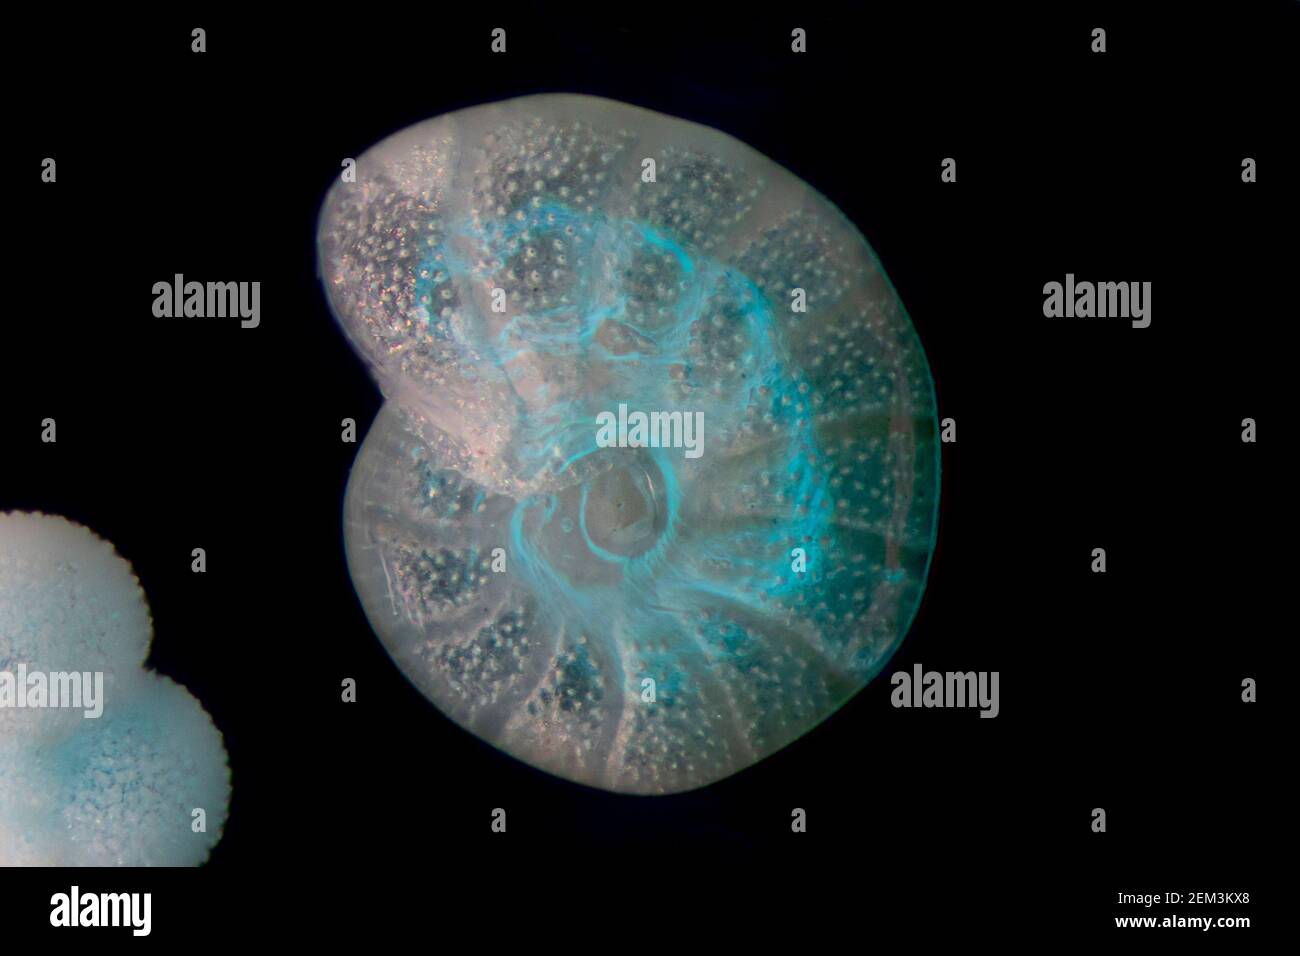 foraminiferans, forams (Foraminiferida), Recent planktonic foraminifera, dark field microscopic image, magnification x40 related to 35 mm Stock Photo